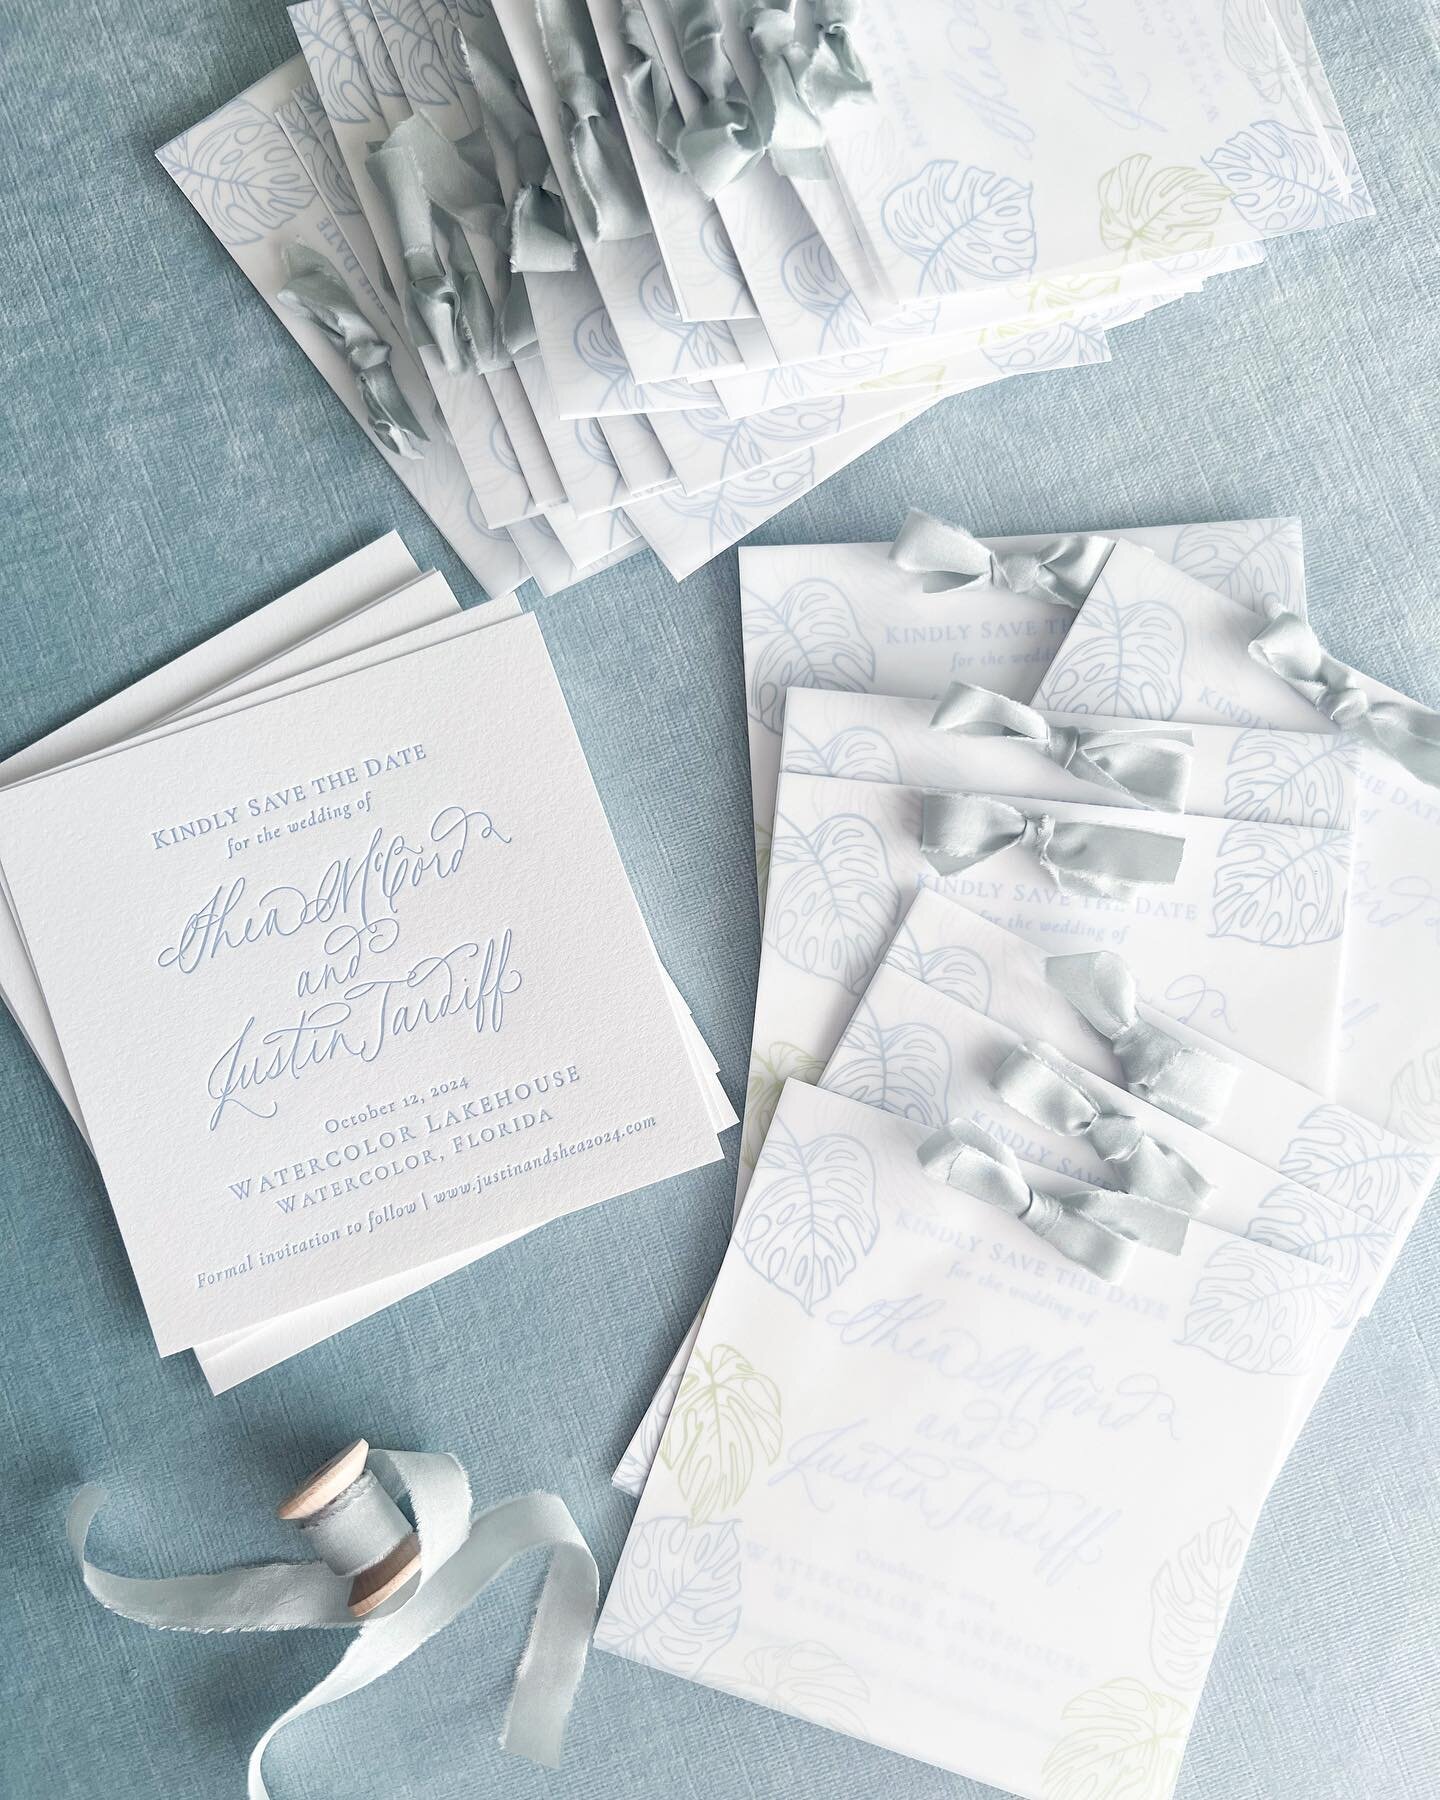 Save the date stacks &lt;🩵&gt; letterpress and printed vellum held together with the softest blue silk ribbon. 
.
.
.
.

#weddingday #weddingideas #weddingdetails #realwedding #southernwedding #weddingcalligraphy #bridetobe #weddingplanning #realwed